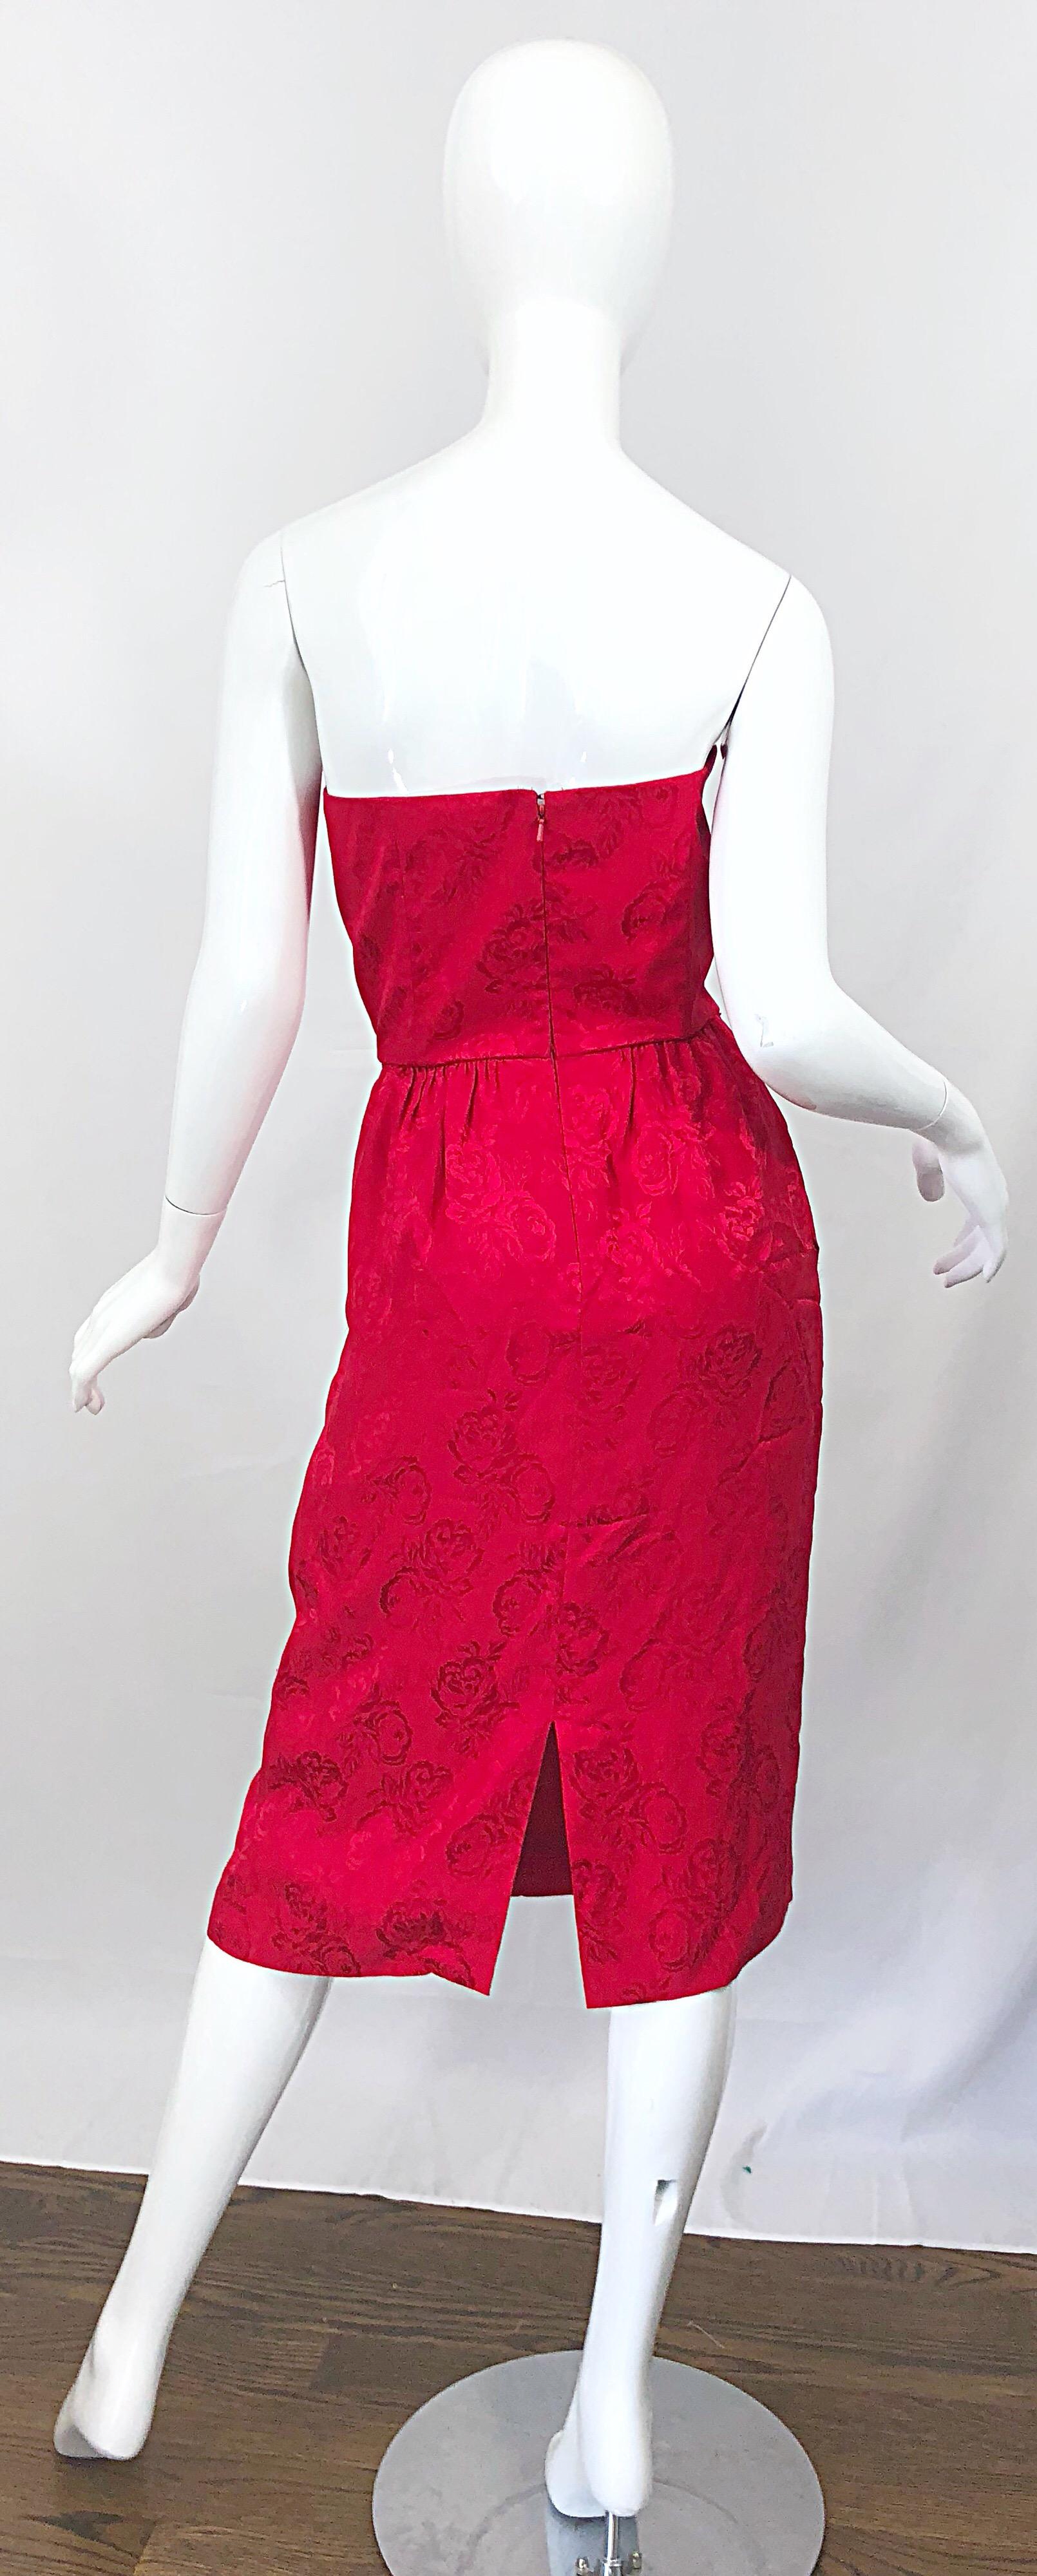 red avant garde dress